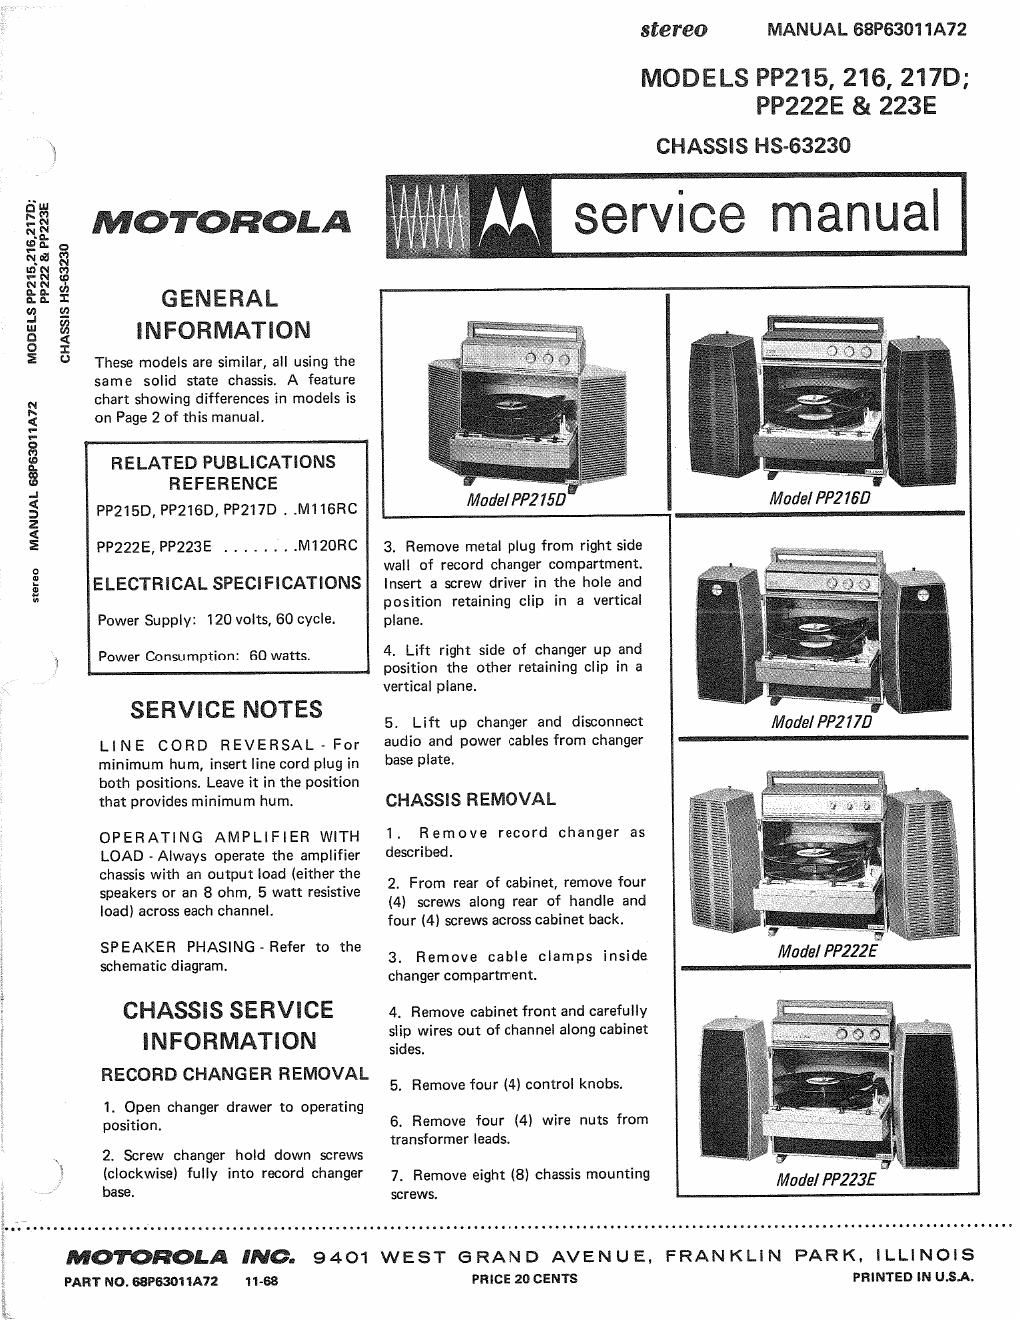 motorola pp 223 e service manual